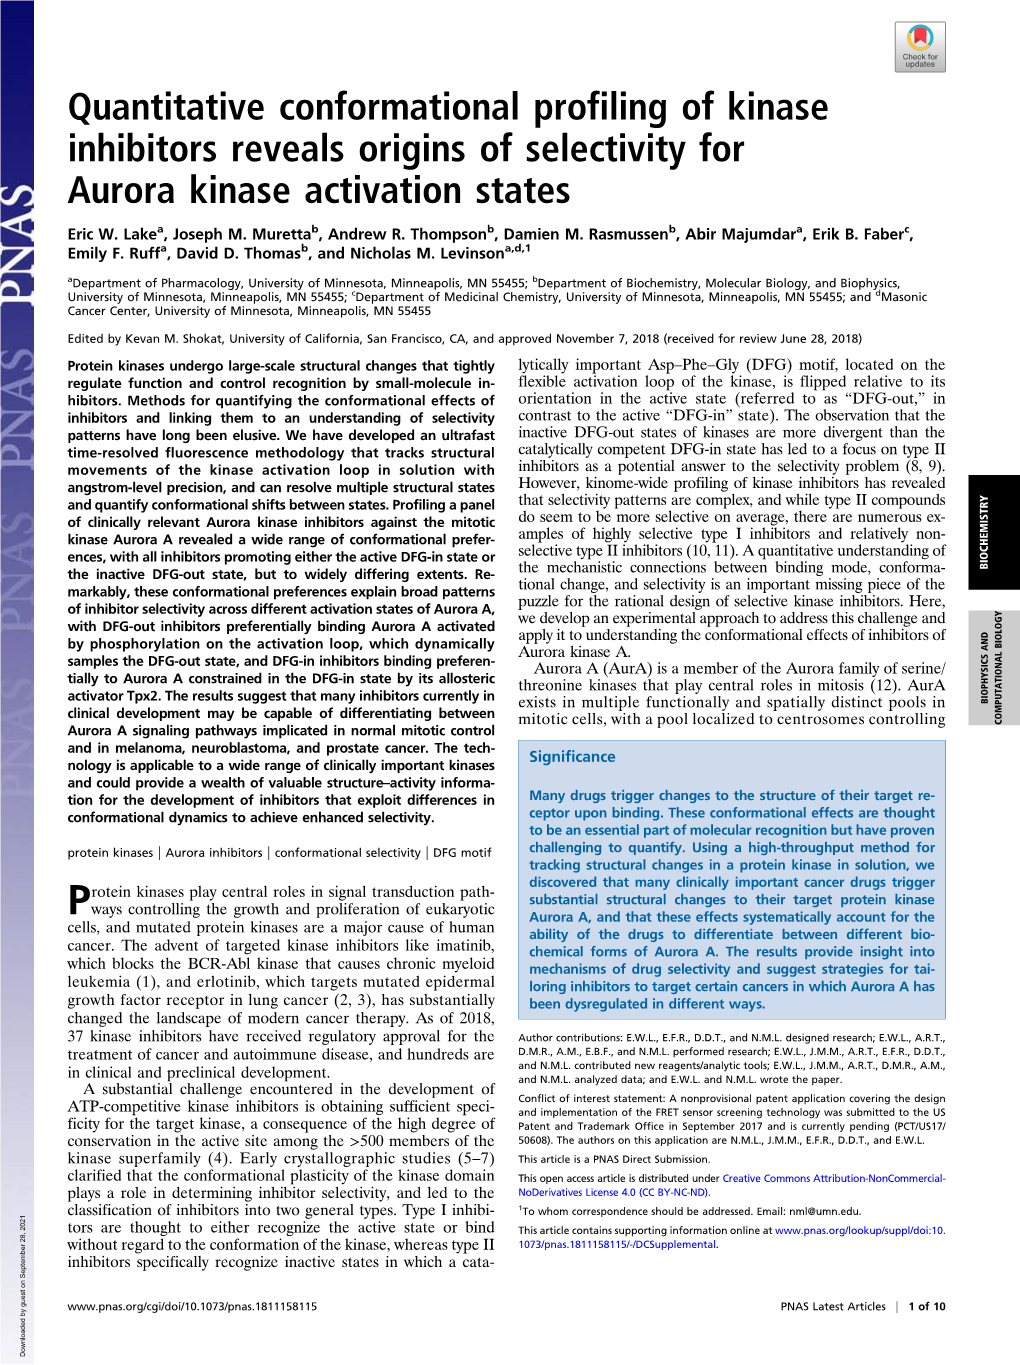 Quantitative Conformational Profiling of Kinase Inhibitors Reveals Origins of Selectivity for Aurora Kinase Activation States